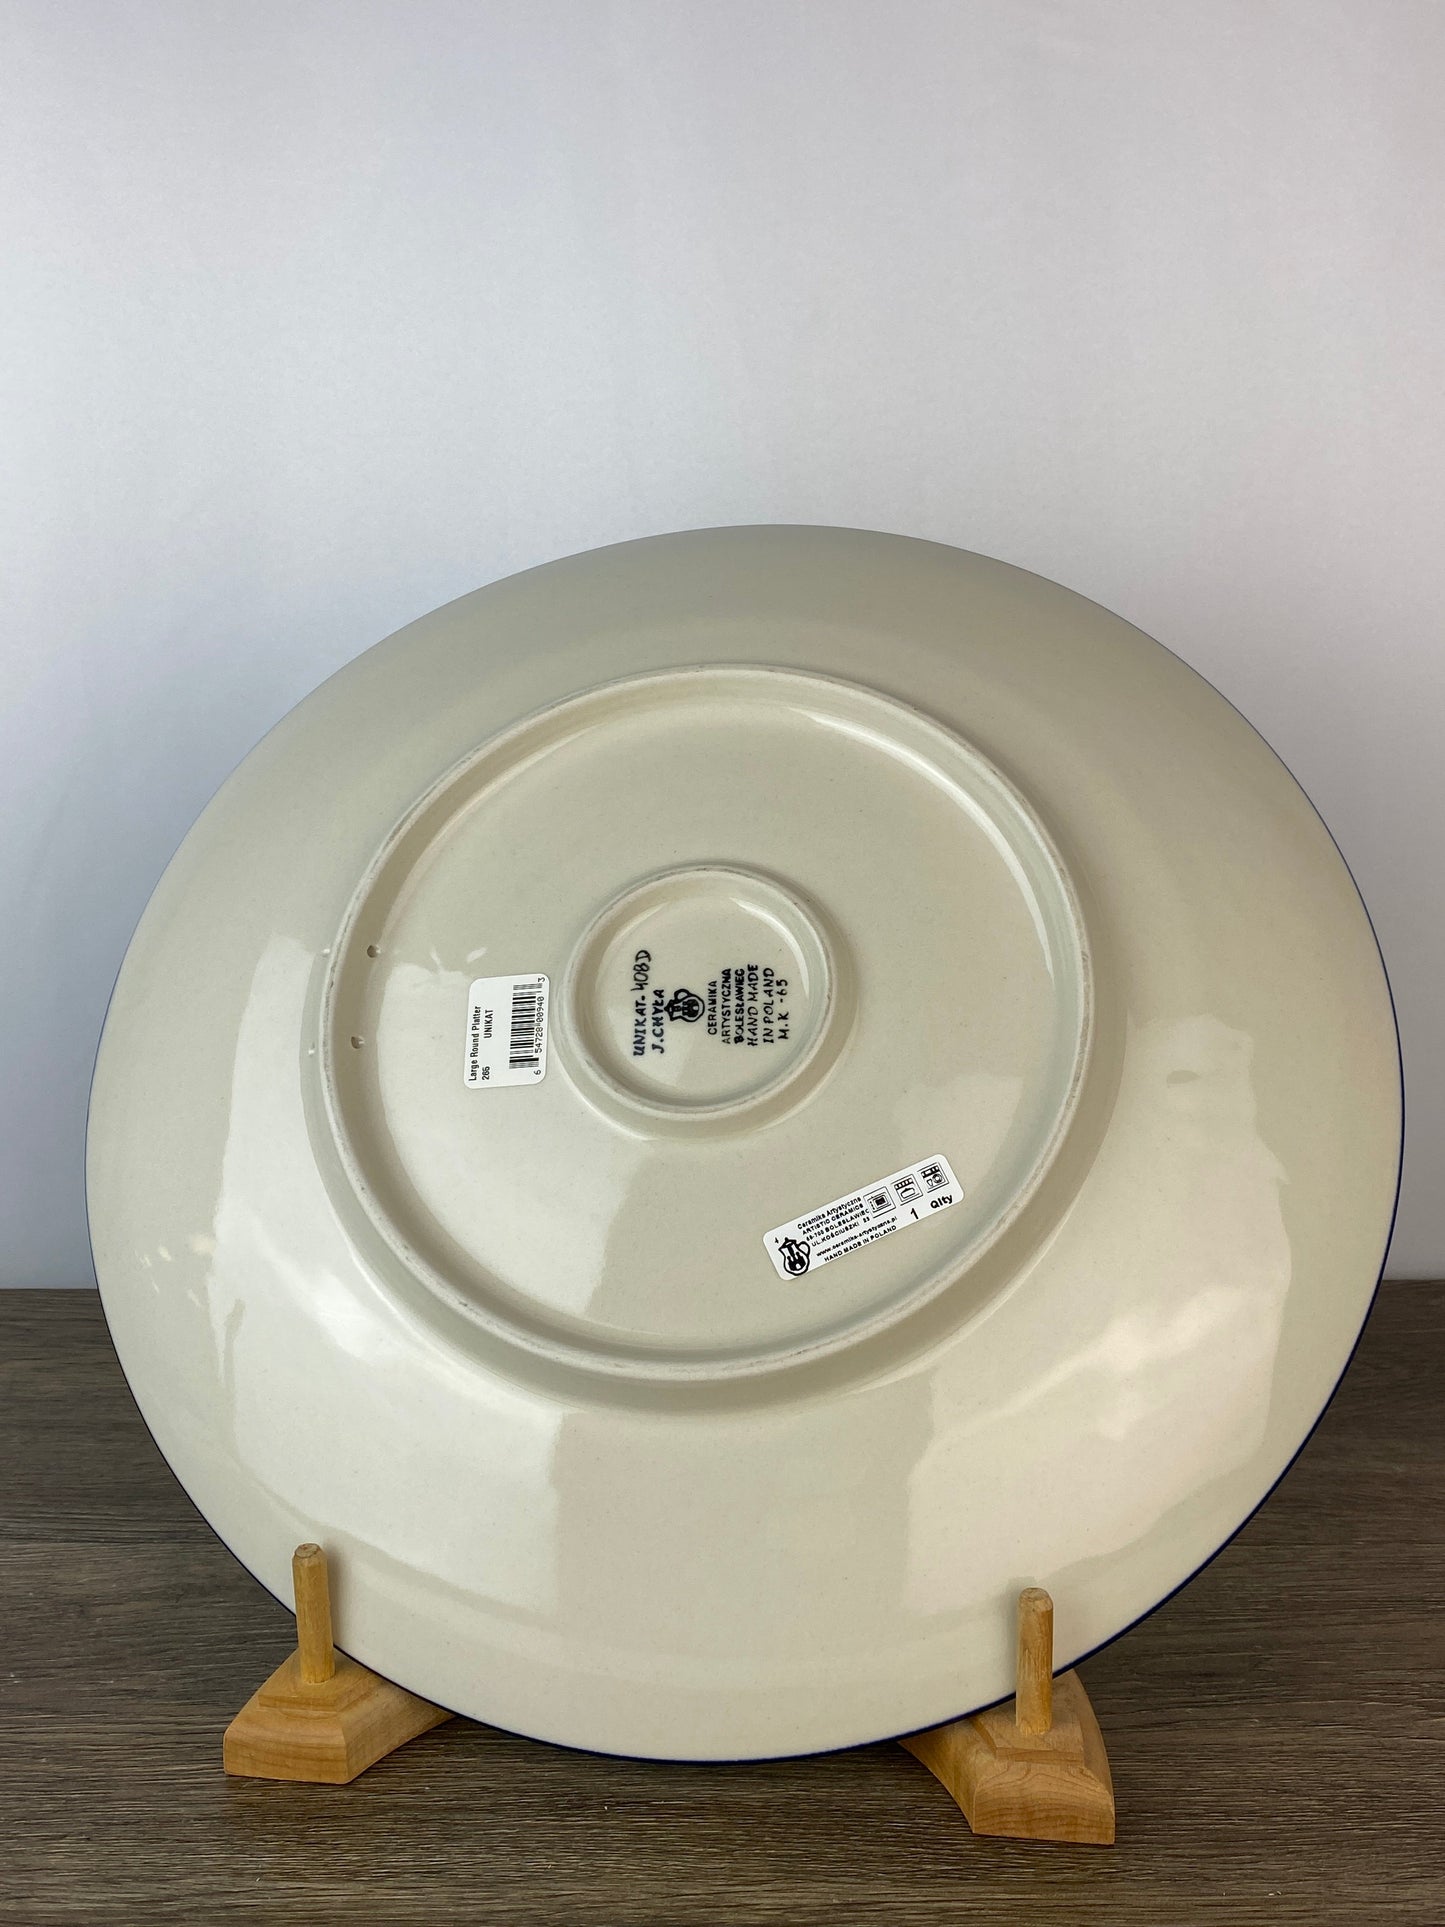 14" Round Unikat Platter - Shape 265 - Pattern U408D